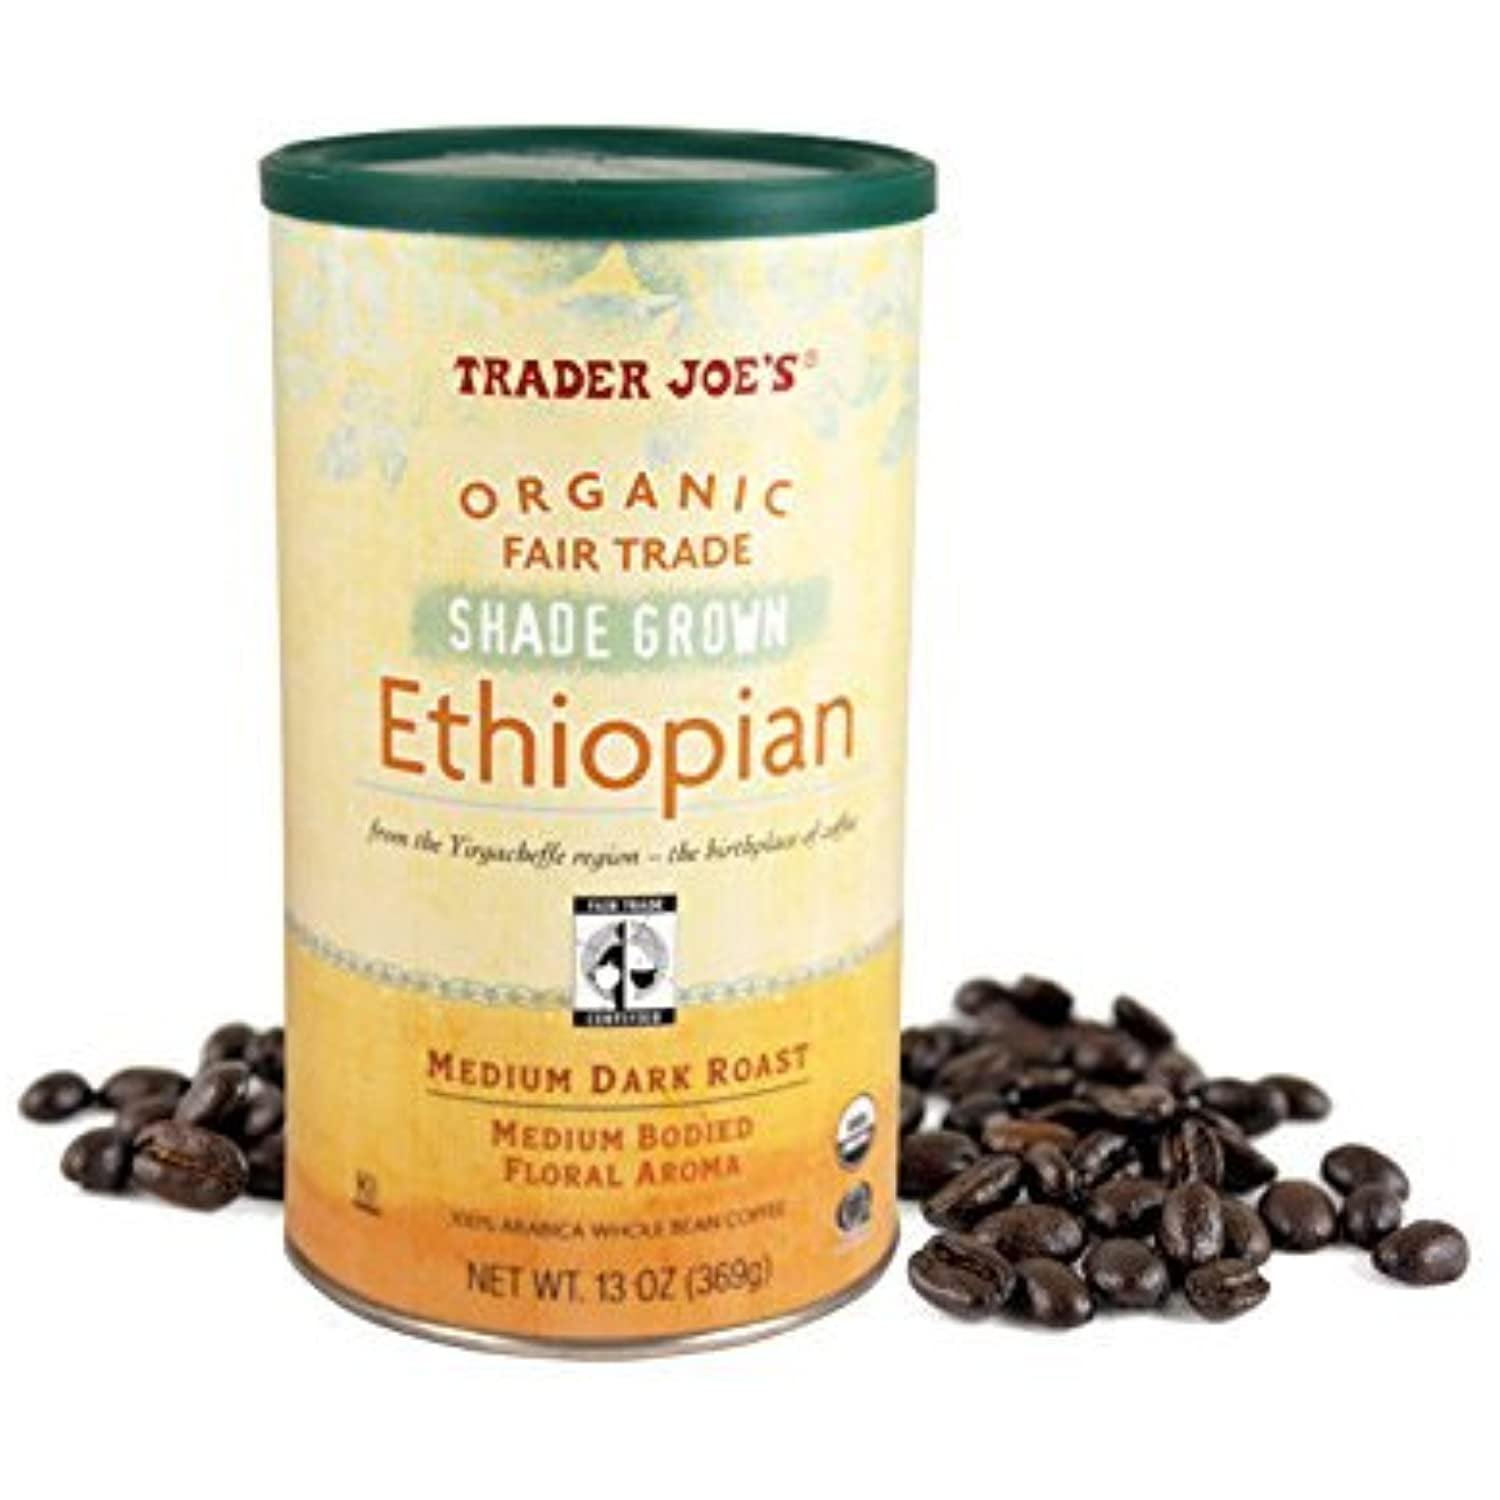 Coffee is grown. Кофе Ethiopia. Coffee enjoy гранулированный. Кофе whole Beans Bio Organic. Кофе Ethiopia Монетка.